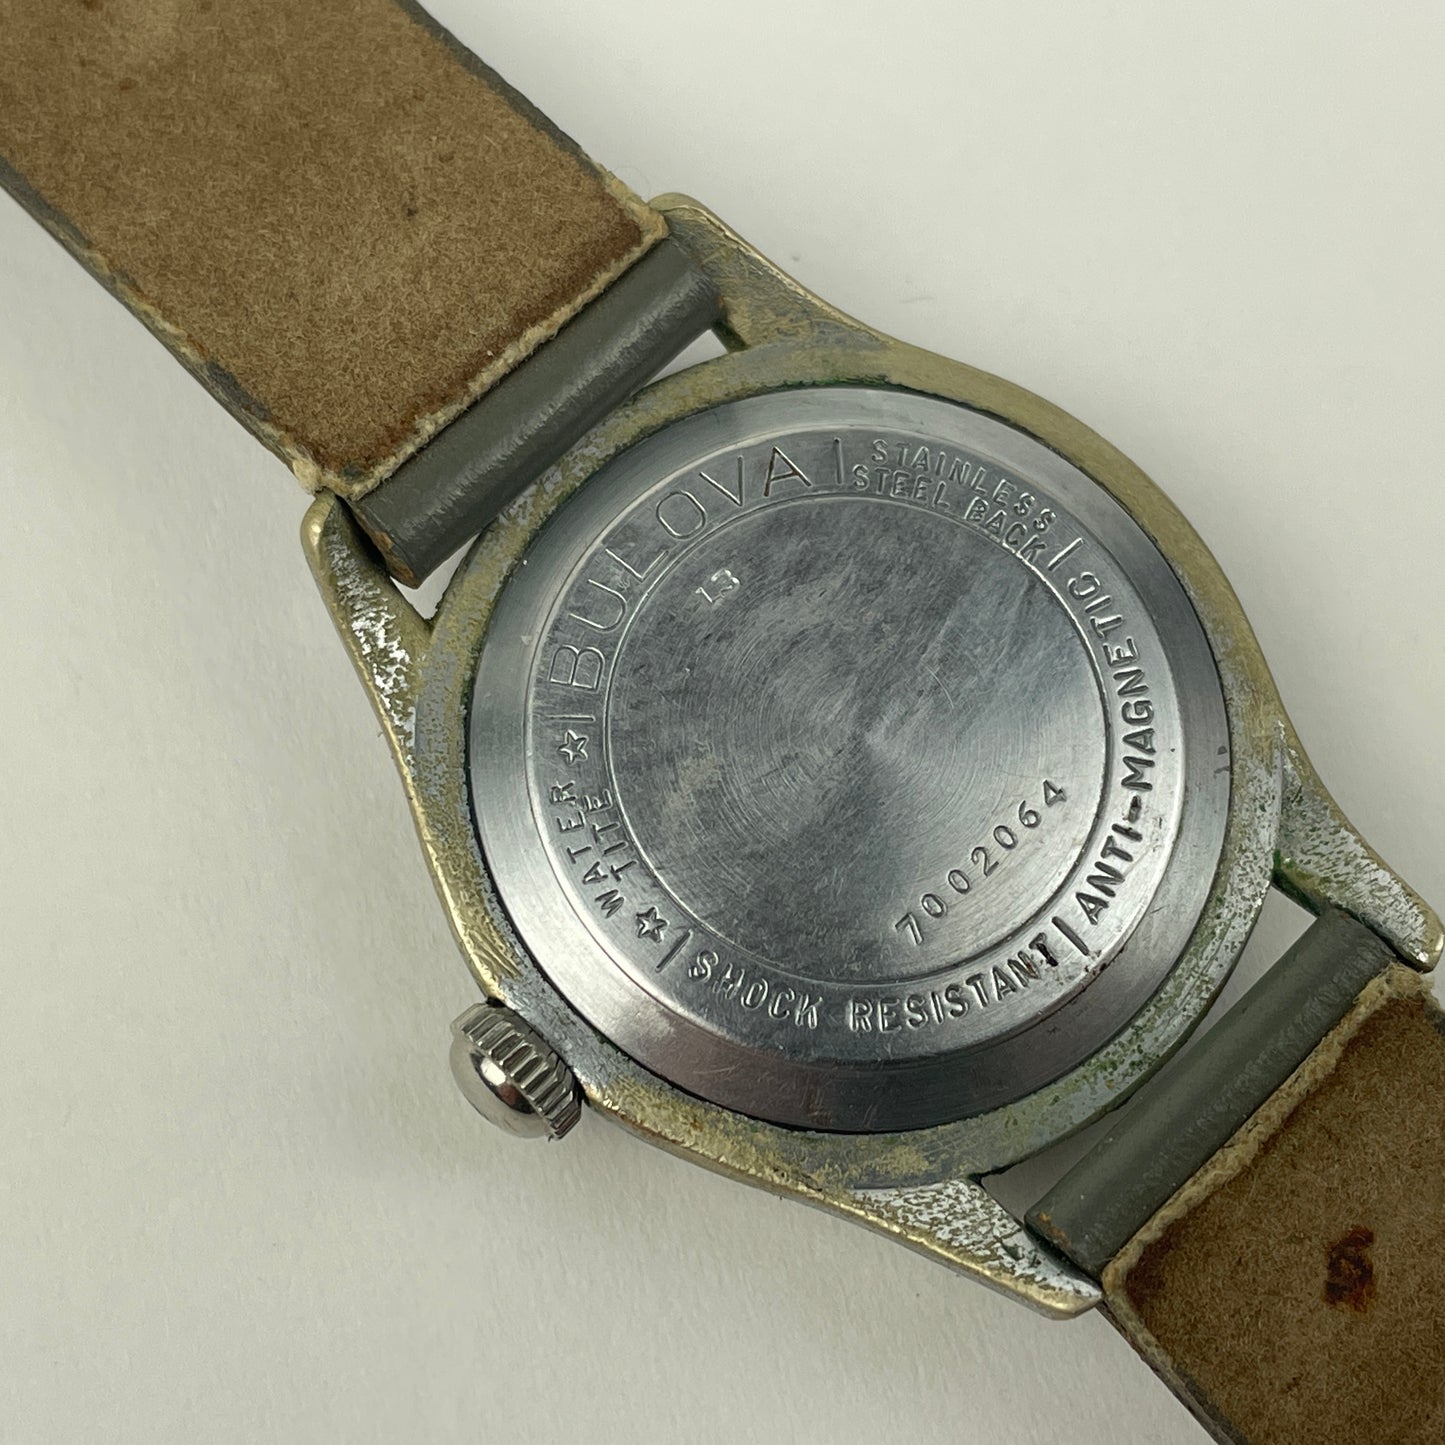 Lot 71- Bulova Men’s Mechanical Wristwatch